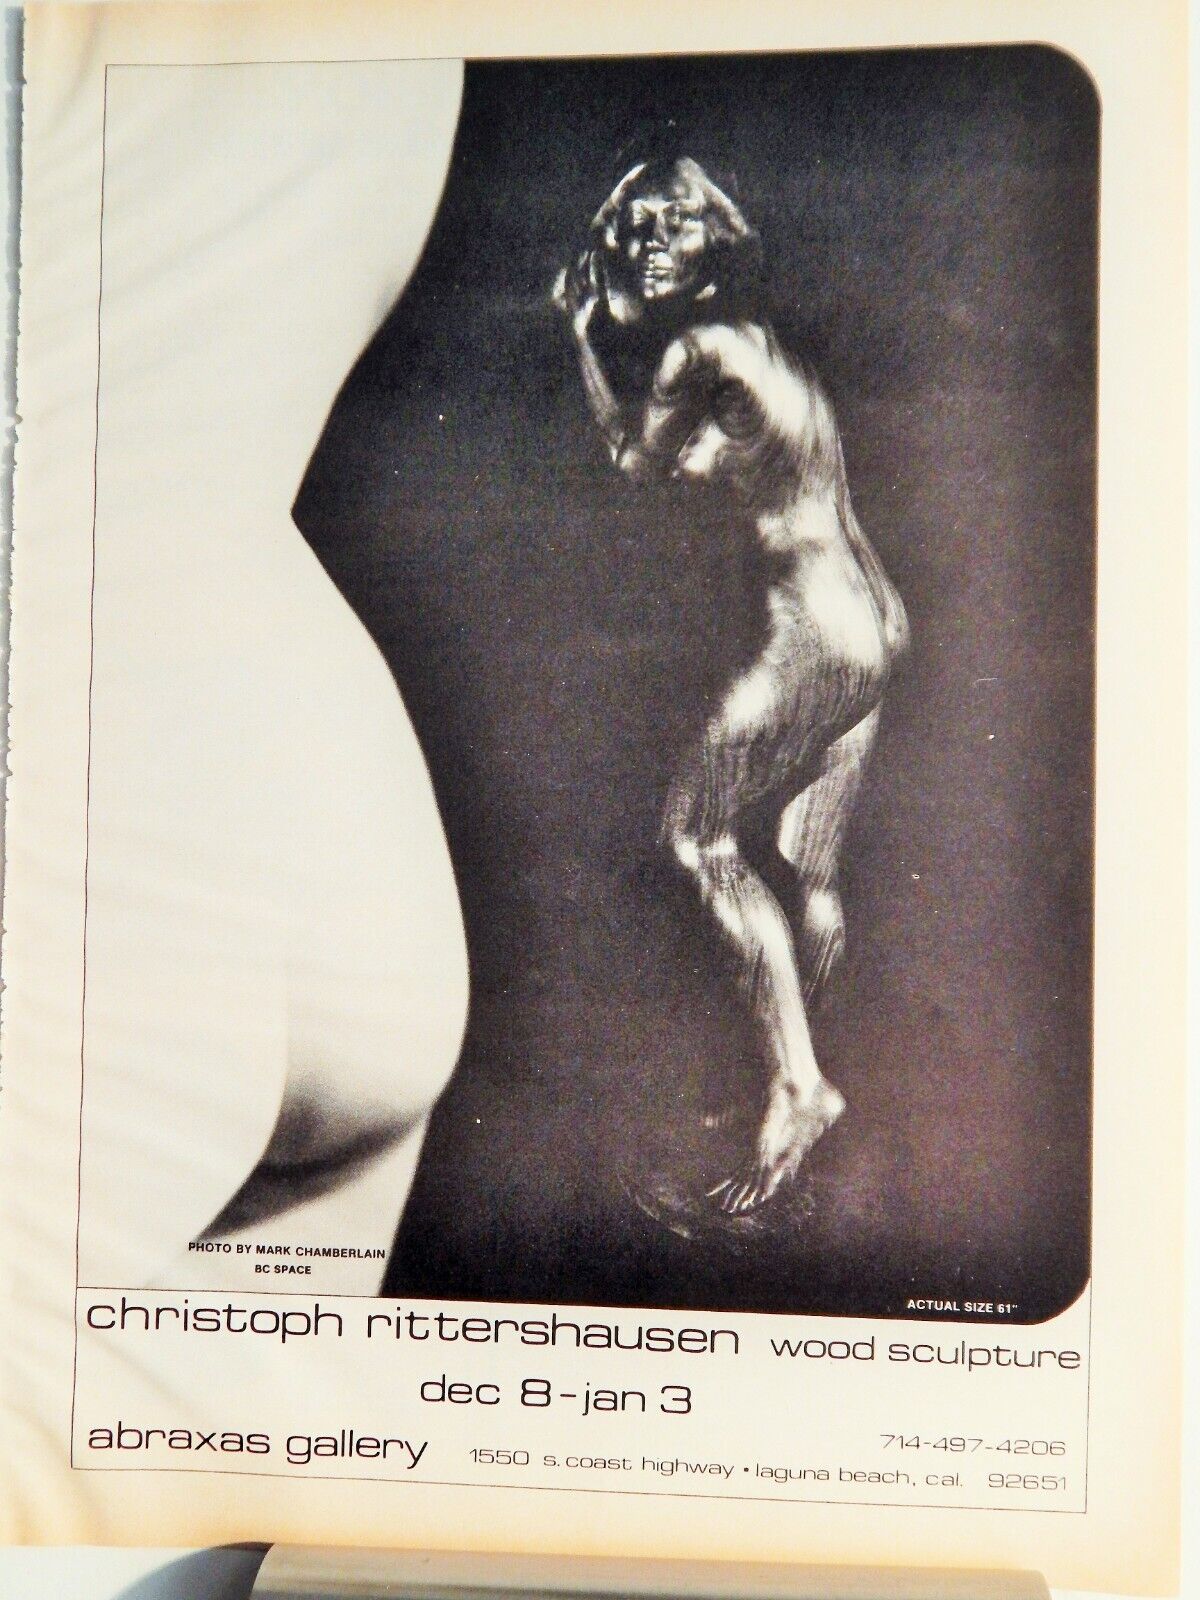 CHRISTOPH RITTERSHAUSEN  ART PIECE VTG ORIG  1979 ADVERTISEMENT